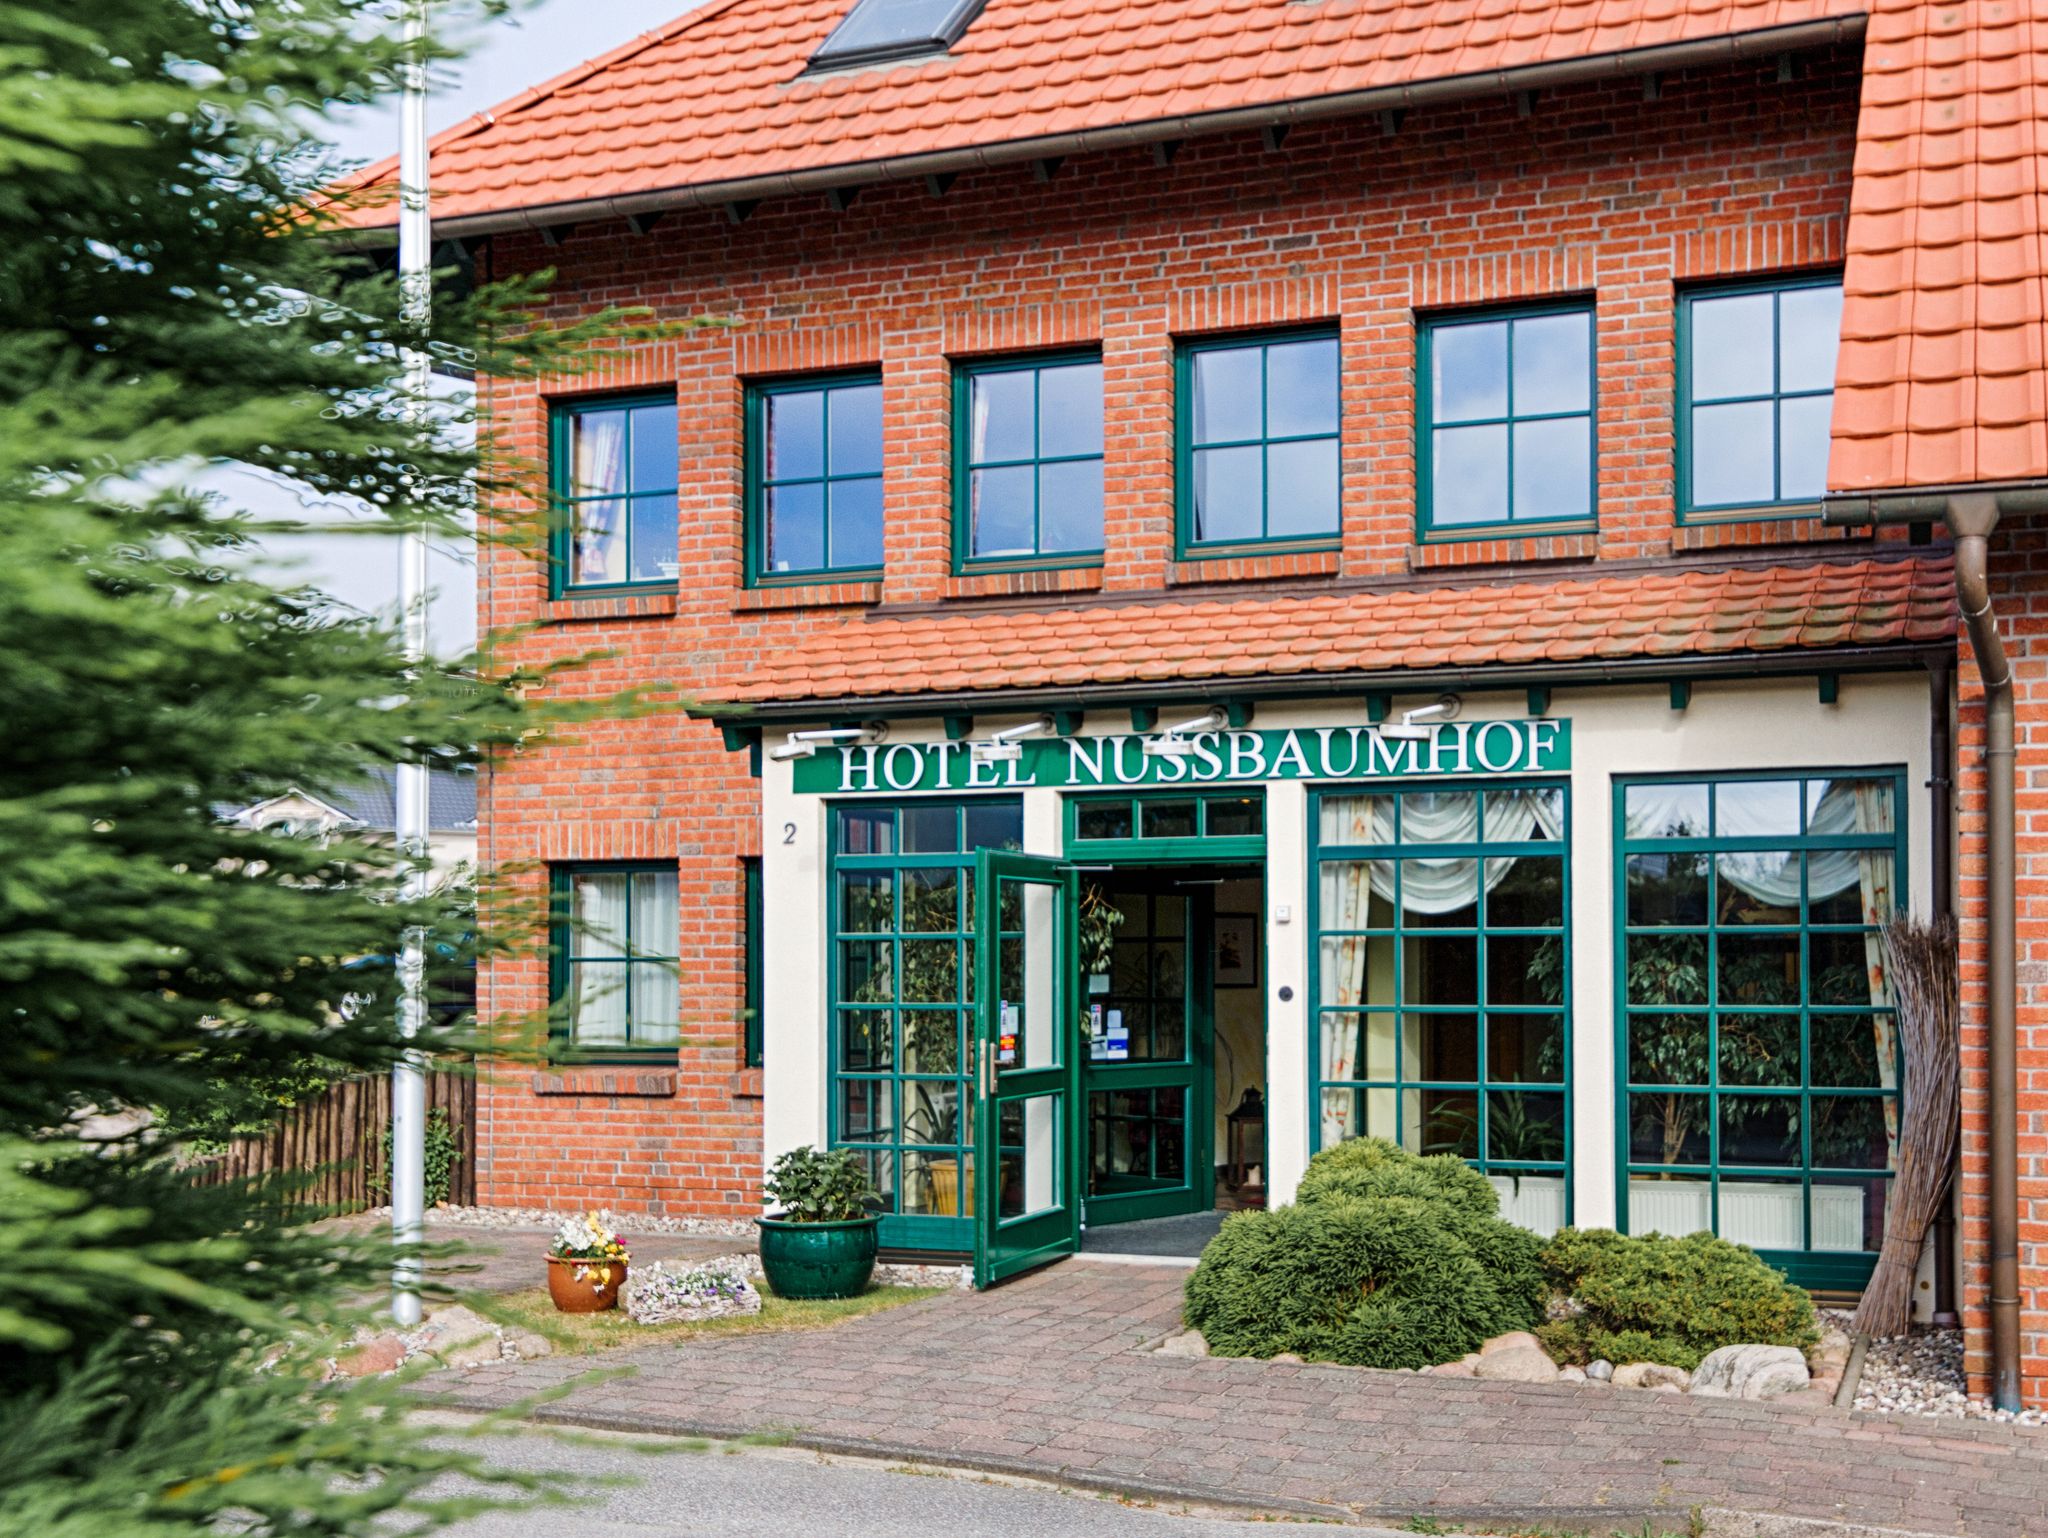 Steigenberger Grandhotel & SPA Heringsdorf